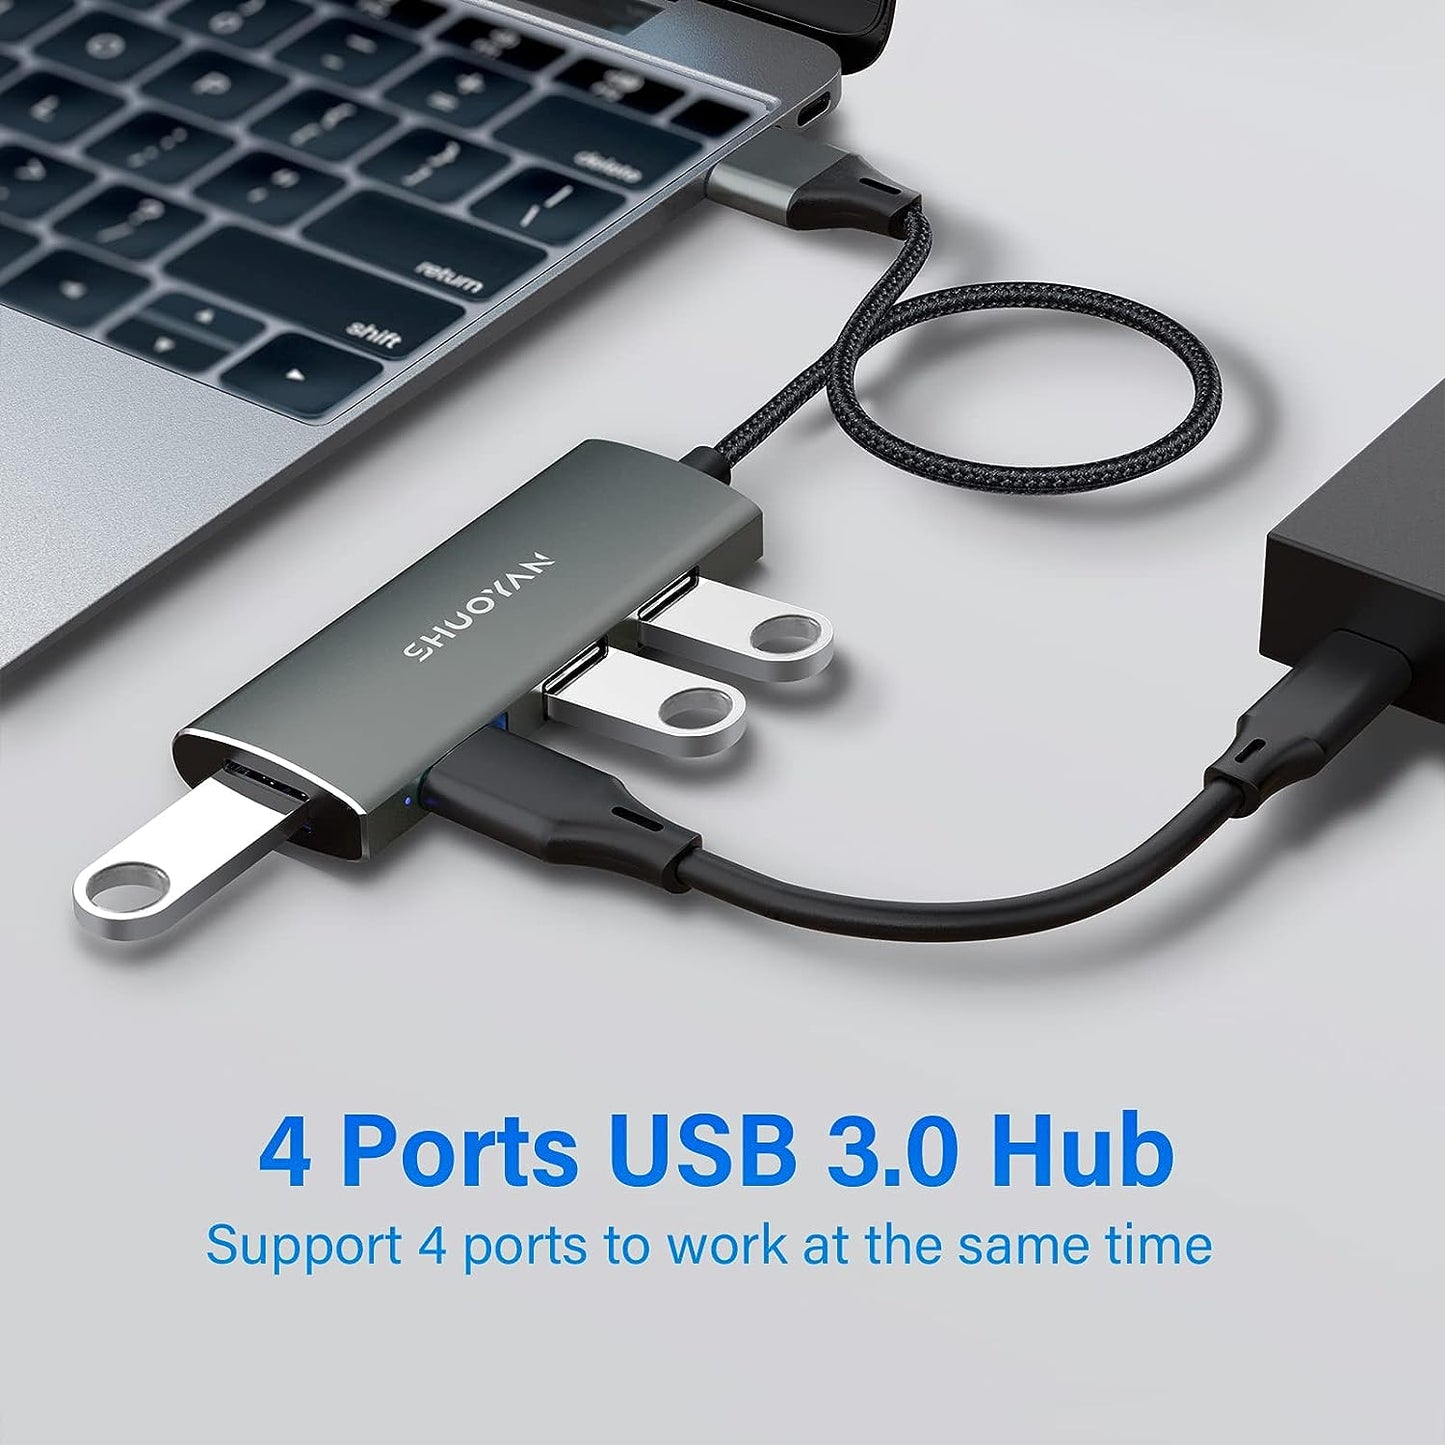 Ultra-Slim 4-Port USB 3.0 Hub - USB Splitter for Laptop, Desktop, Flash Drive, Printer, Keyboard, Mouse Adapter, Camera, and More